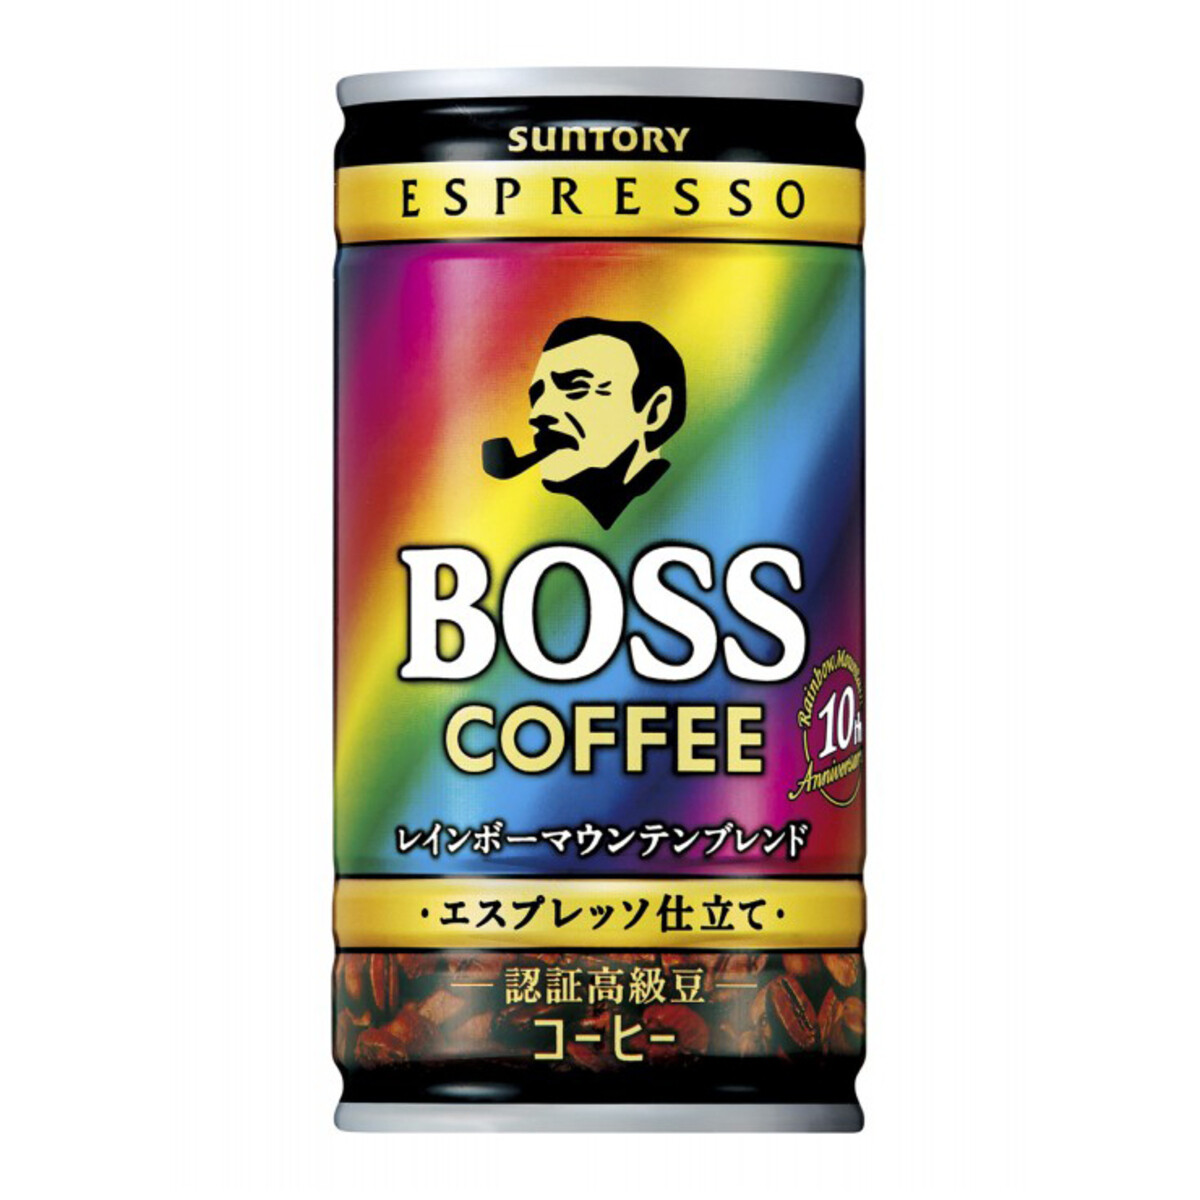 Suntory Boss Coffee Rainbow Espresso (185G)